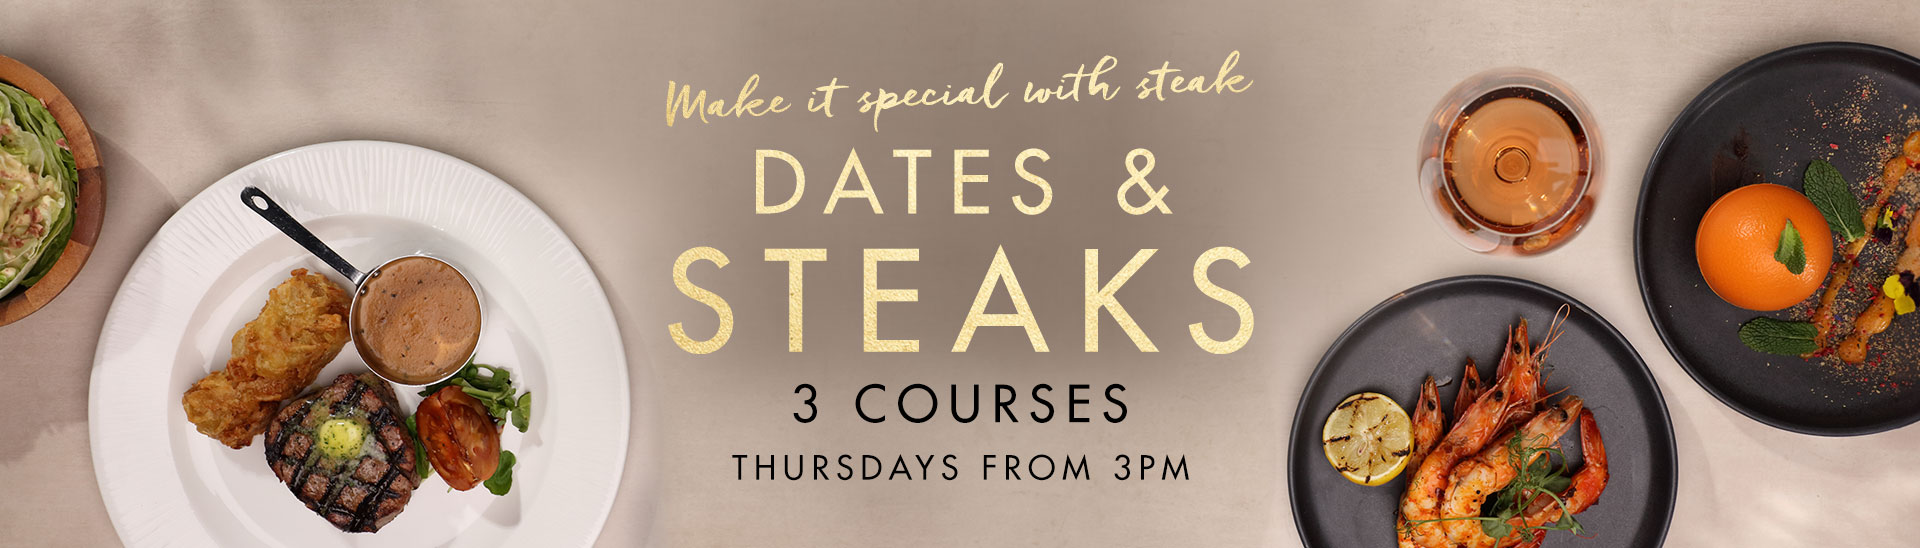 Dates & Steaks at Miller & Carter Brighton